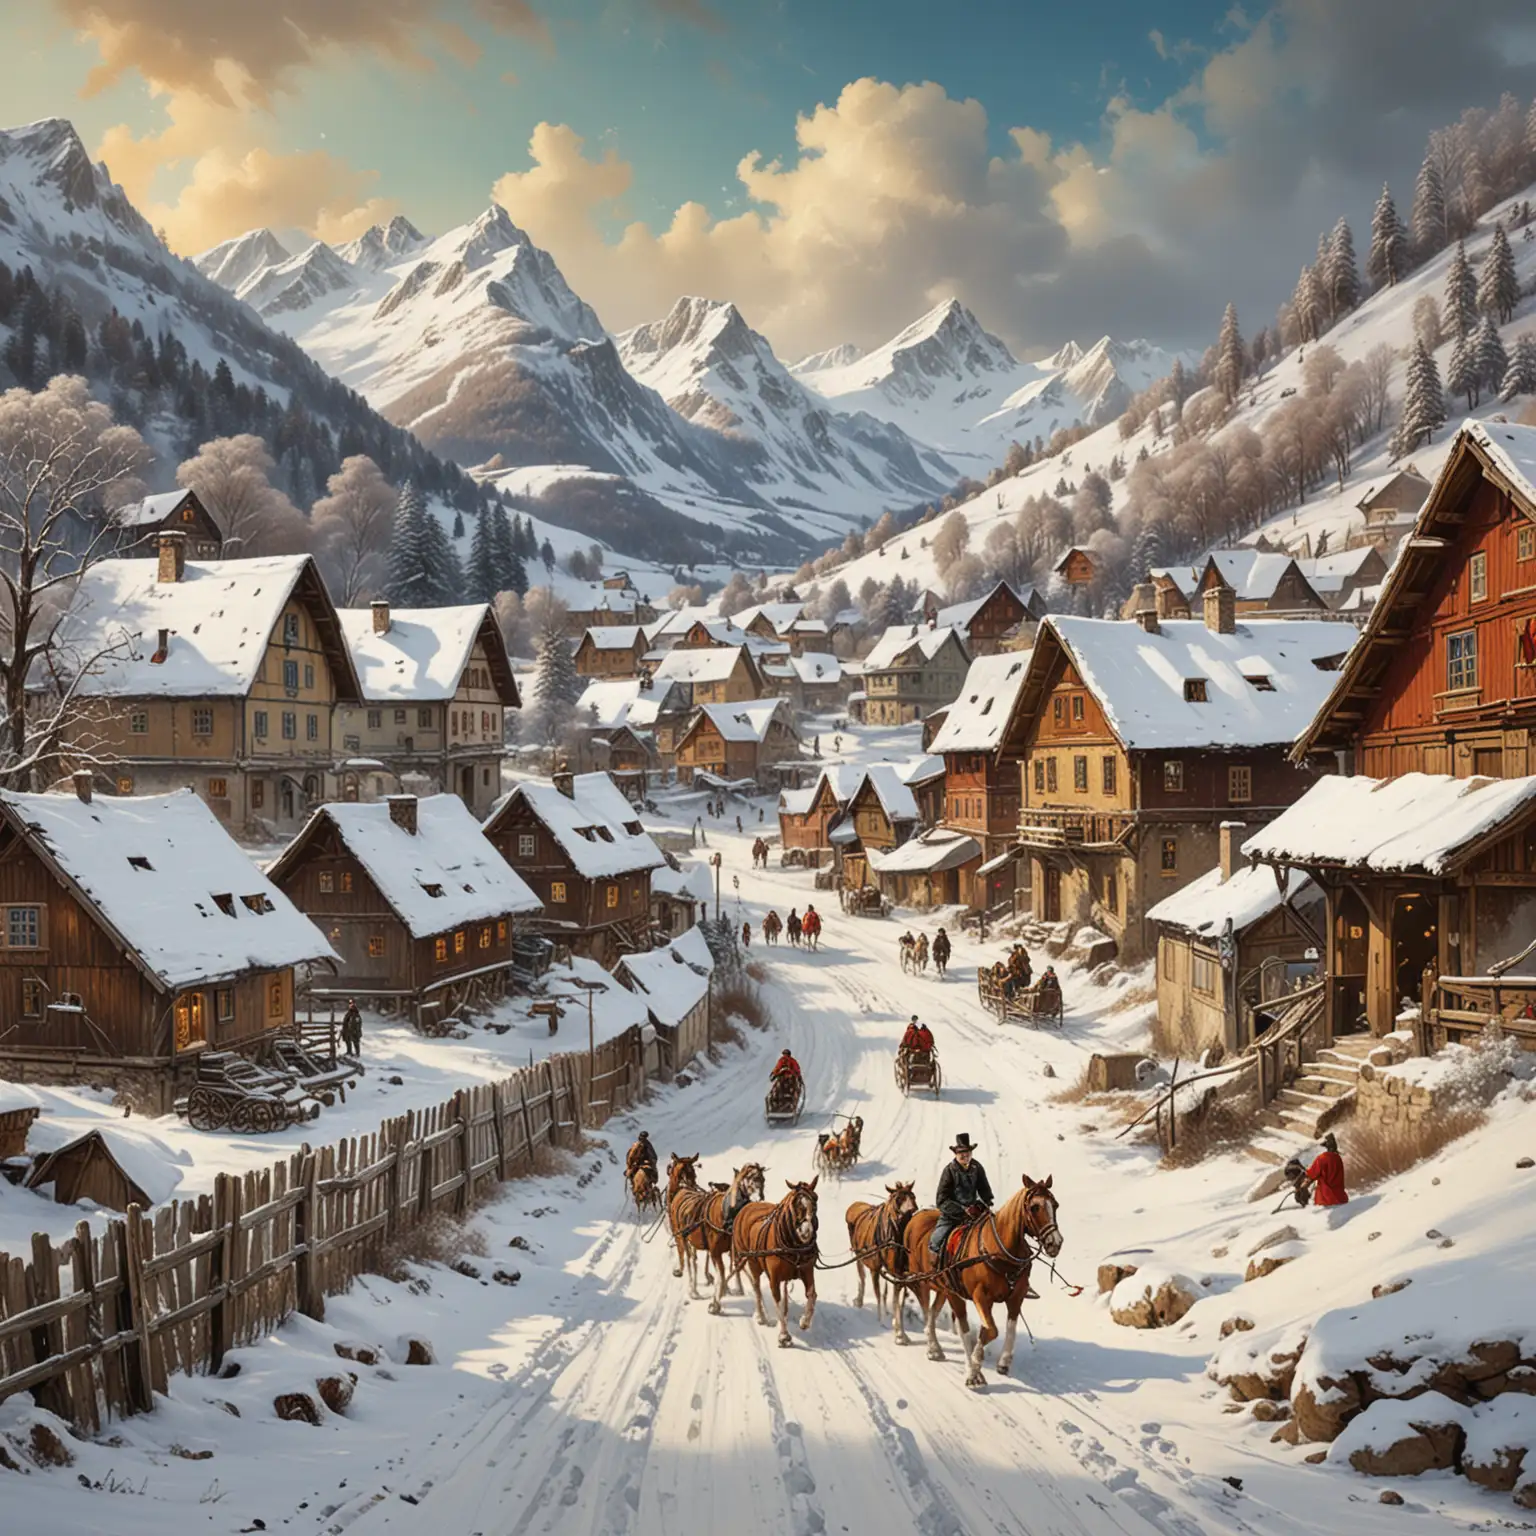 Winter Wonderland in the Austrian Alps 19th Century Scene with Skier Sleds and Saint Bernard